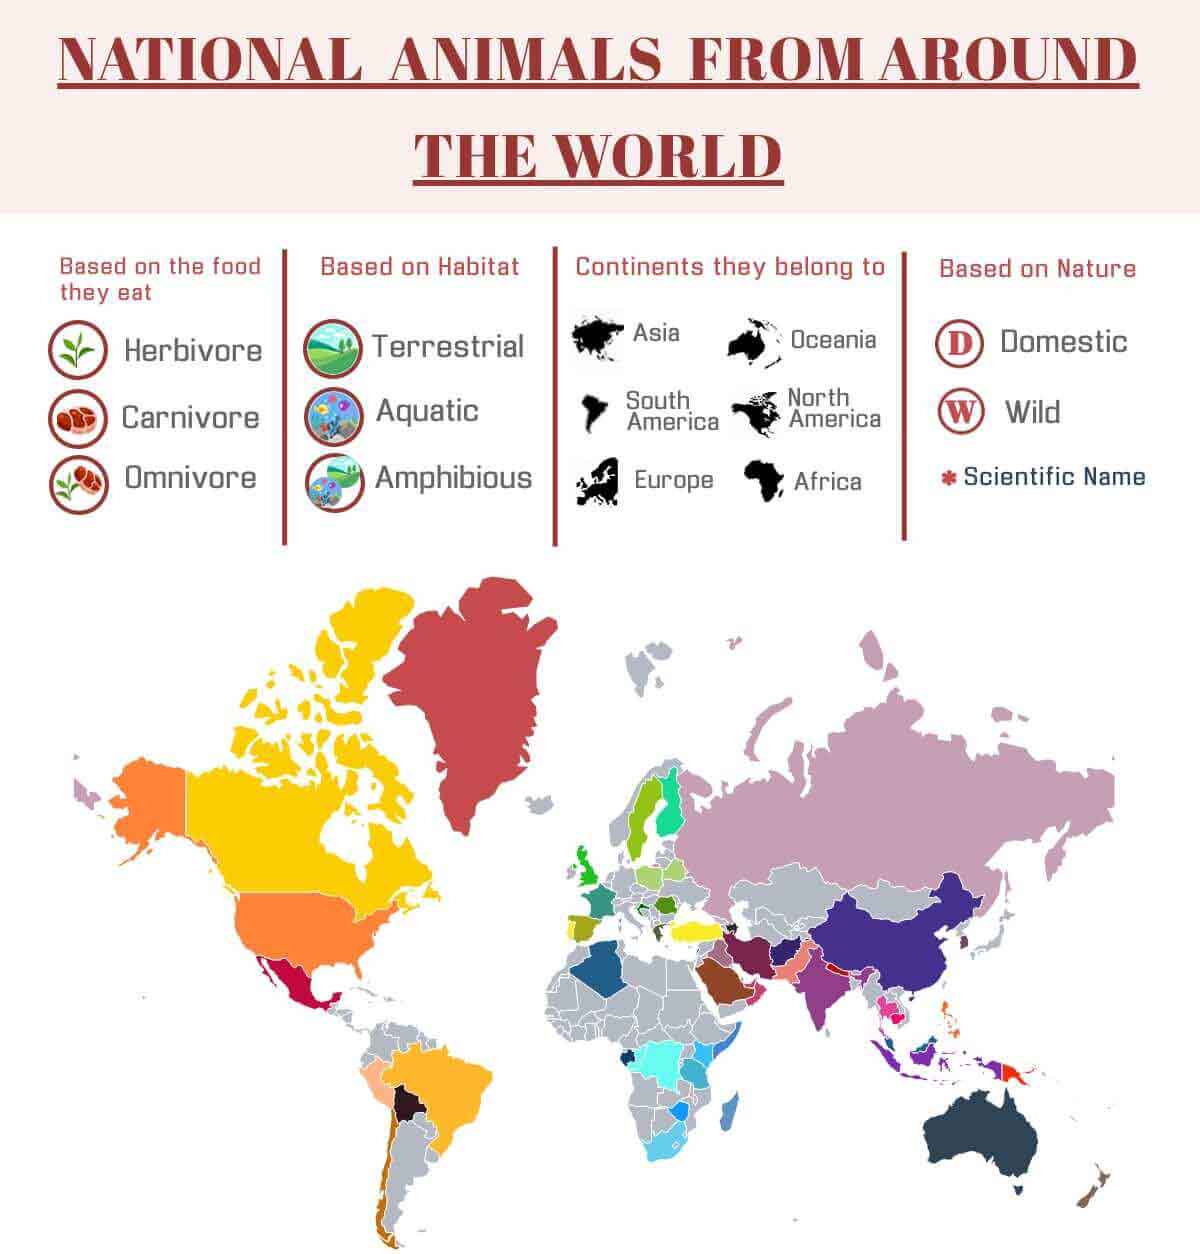 National Animals From Around the World [Infographic]